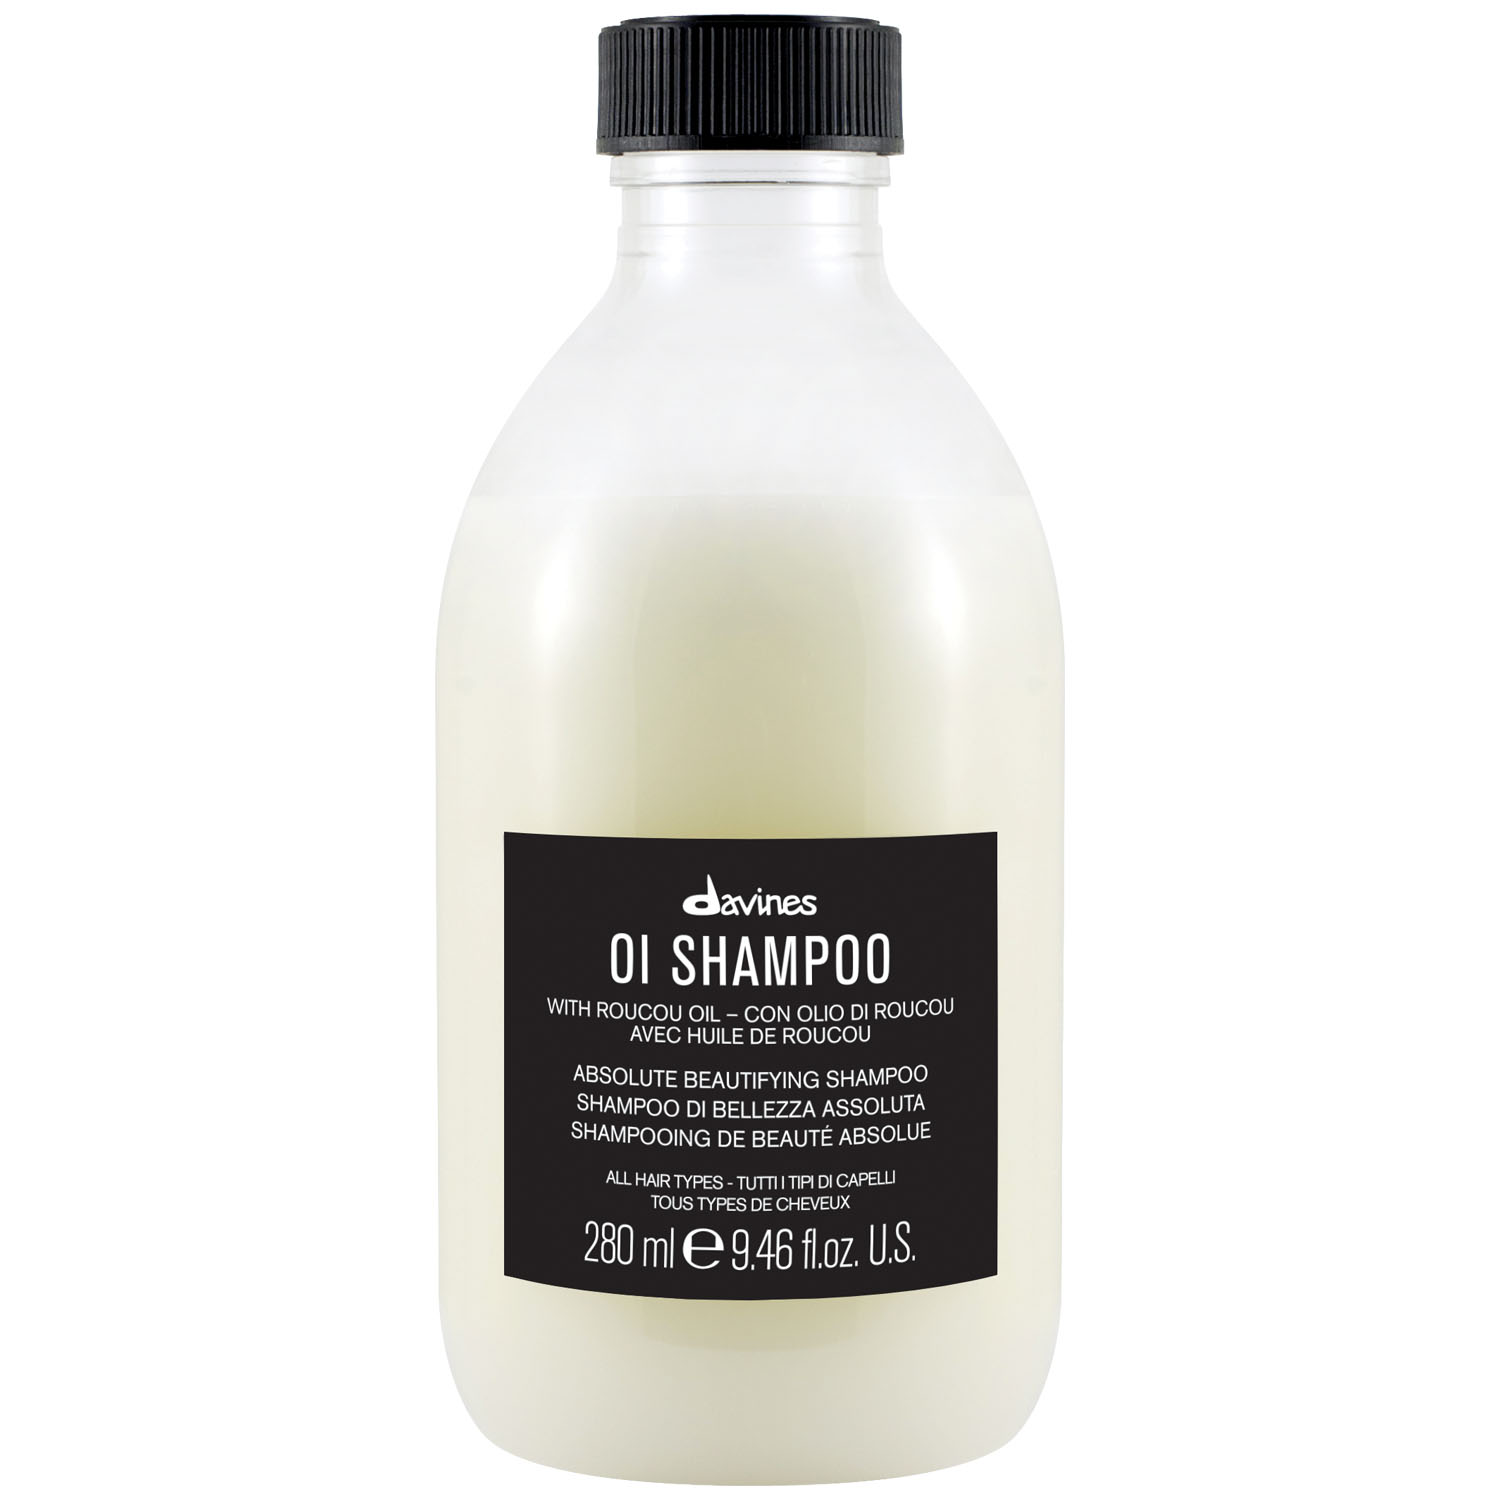 Davines Шампунь для абсолютной красоты волос Absolute Beautifying Shampoo, 280 мл (Davines, OI)